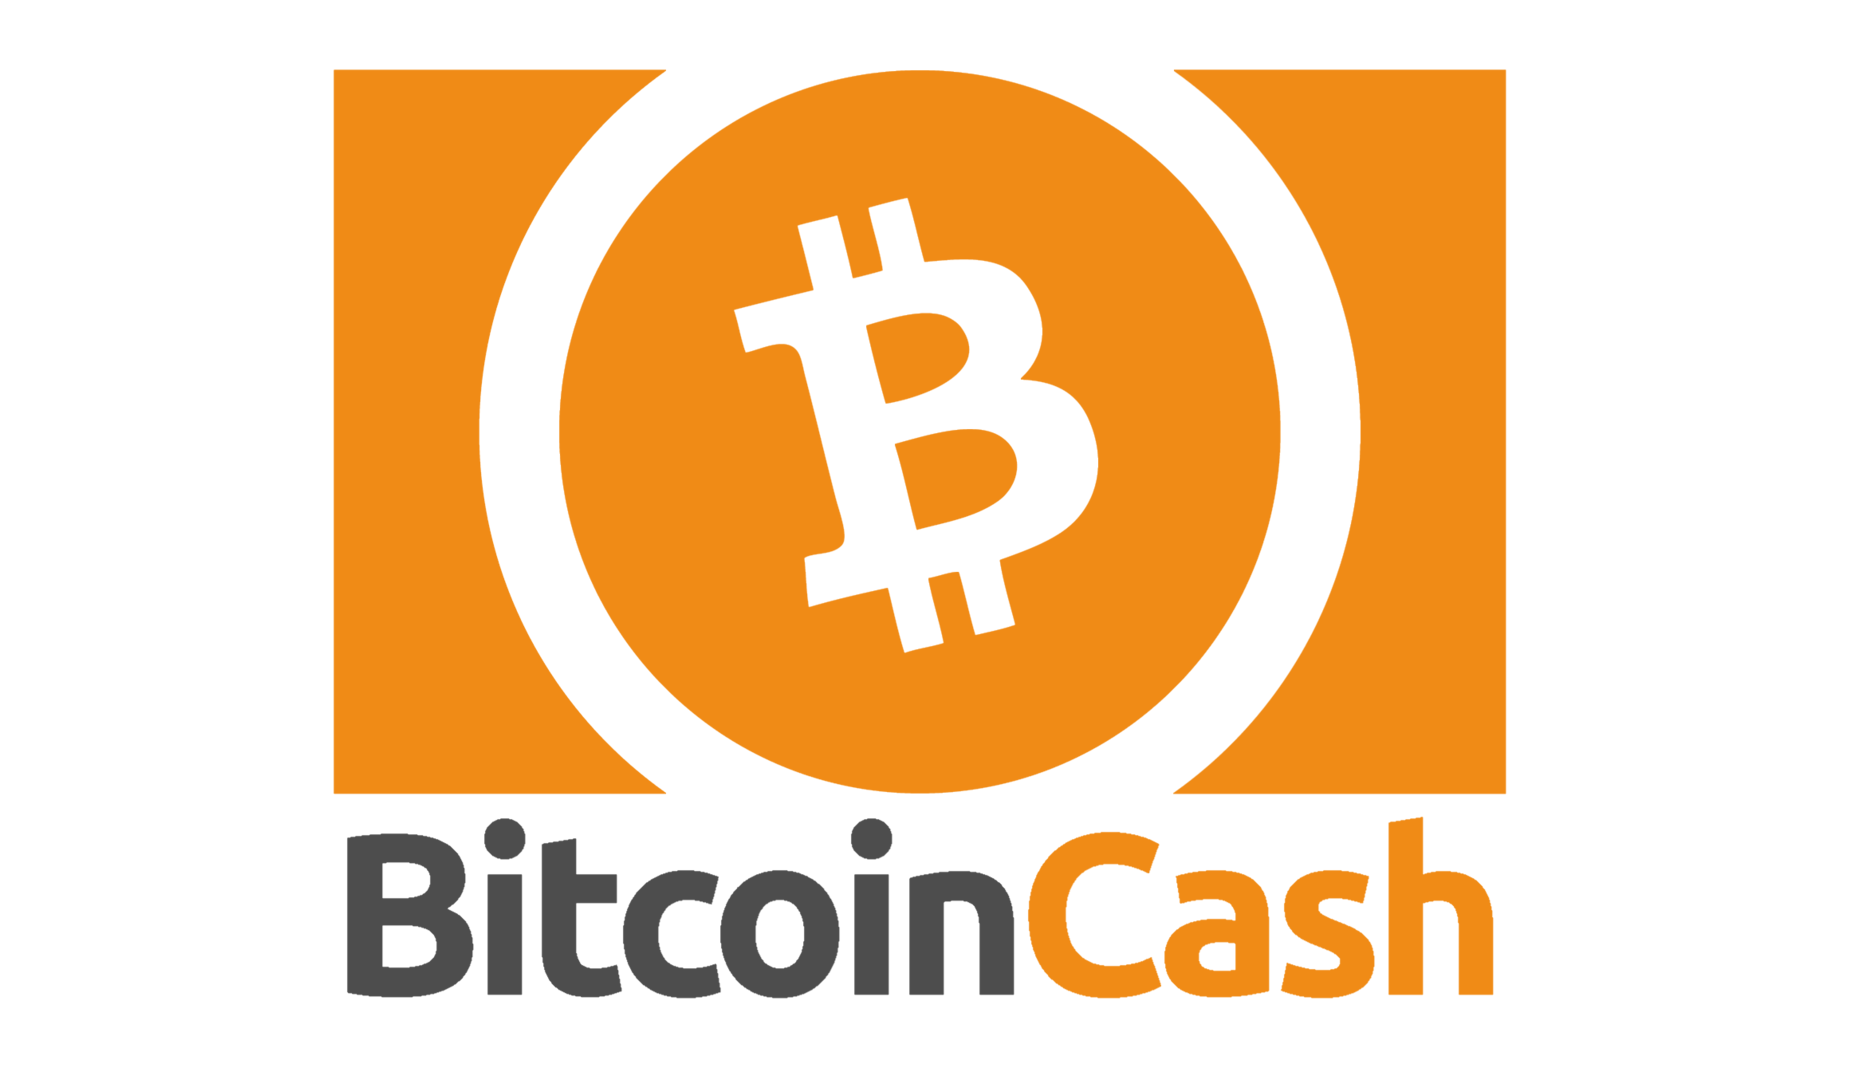 Bitcoin cash breadwallet paper wallet облачный майнинг список лучших